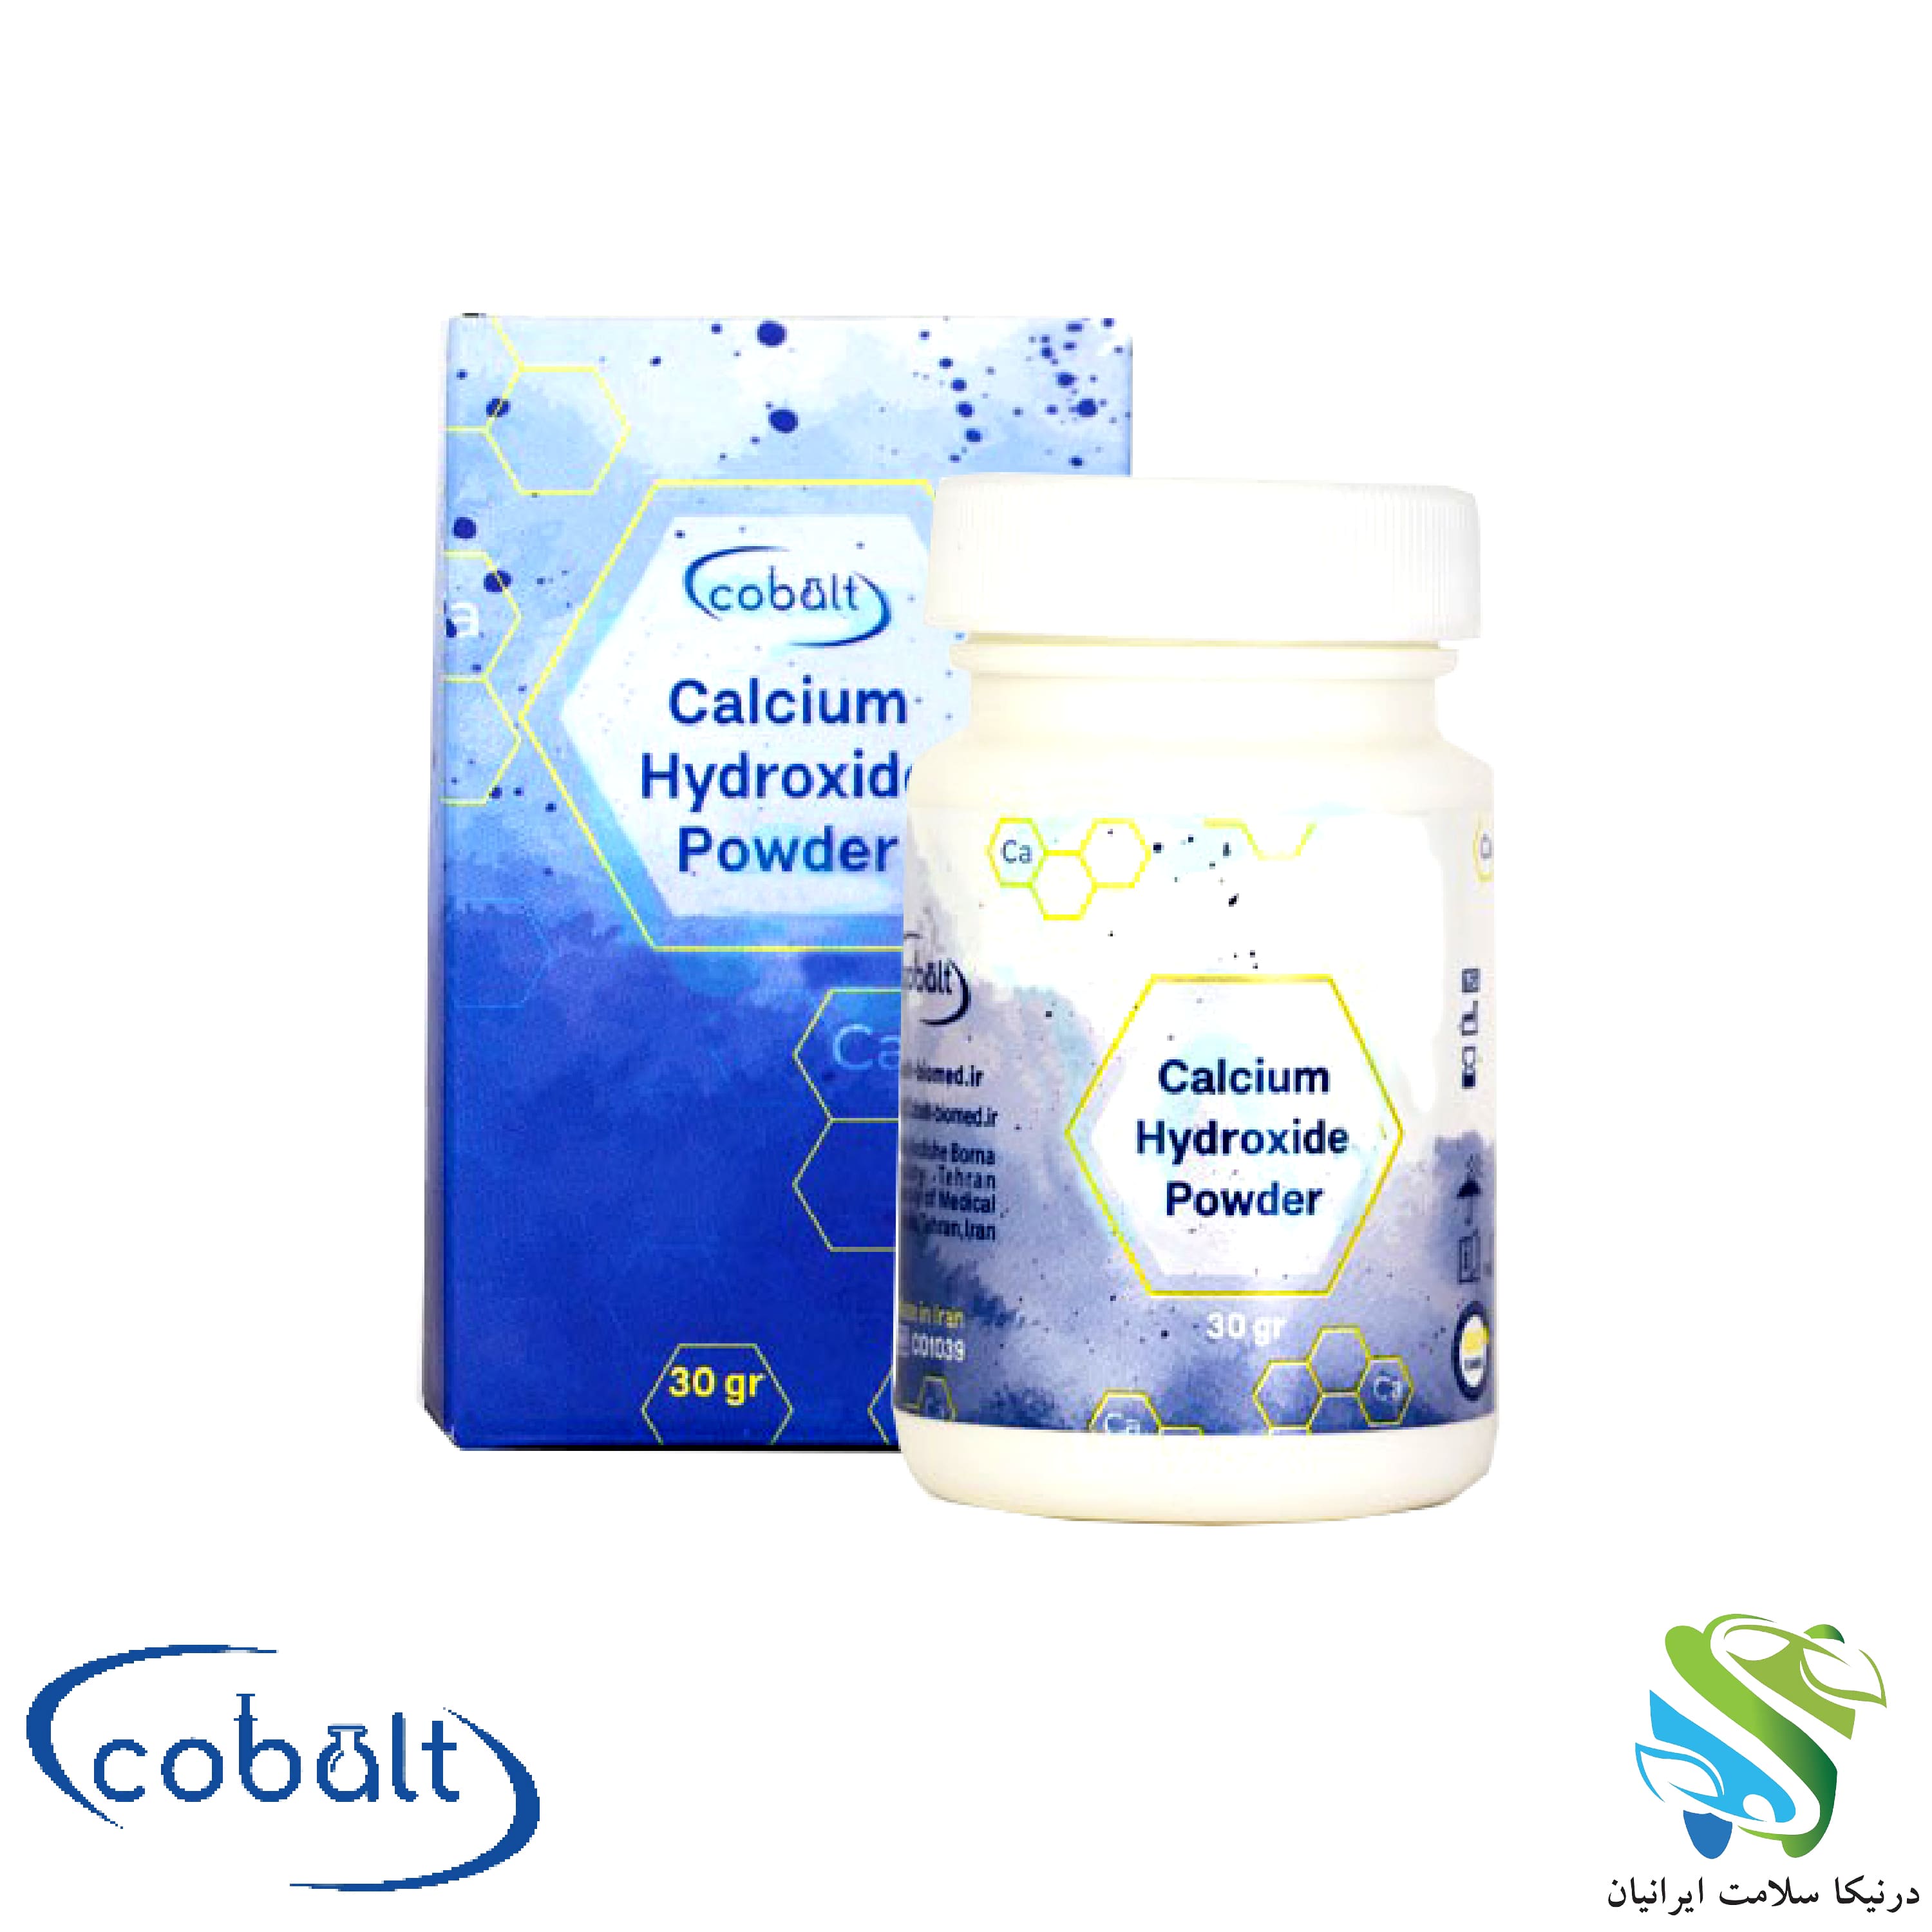 Cobalt Calcium Hydroxide Powder